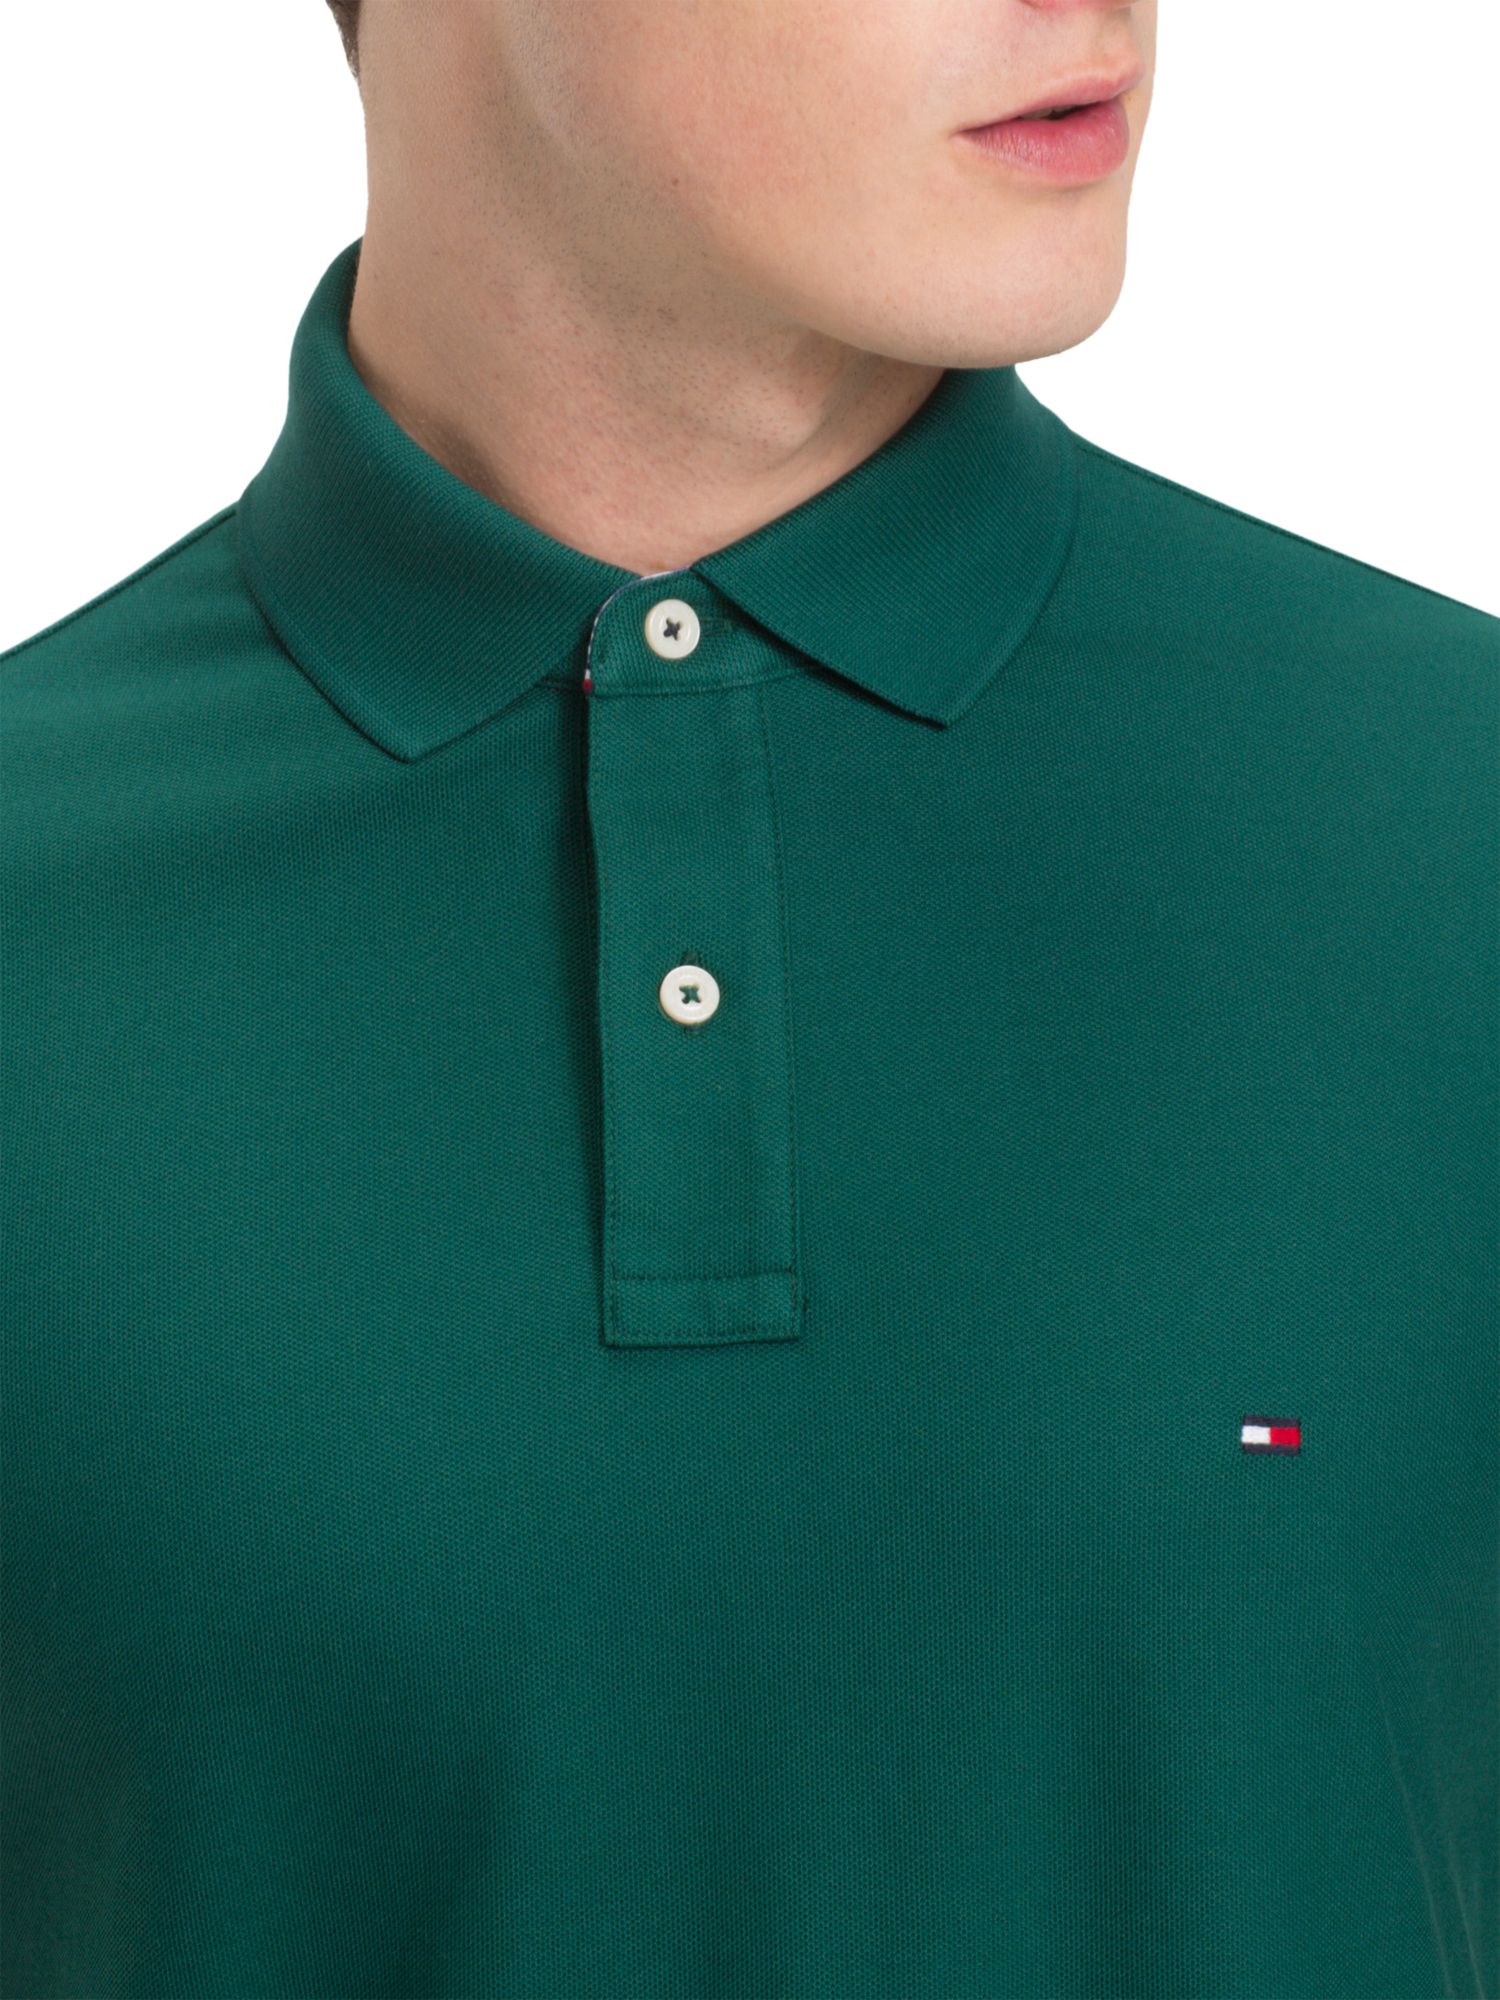 Tommy Hilfiger Short Sleeve Polo Shirt, Green at John Lewis & Partners